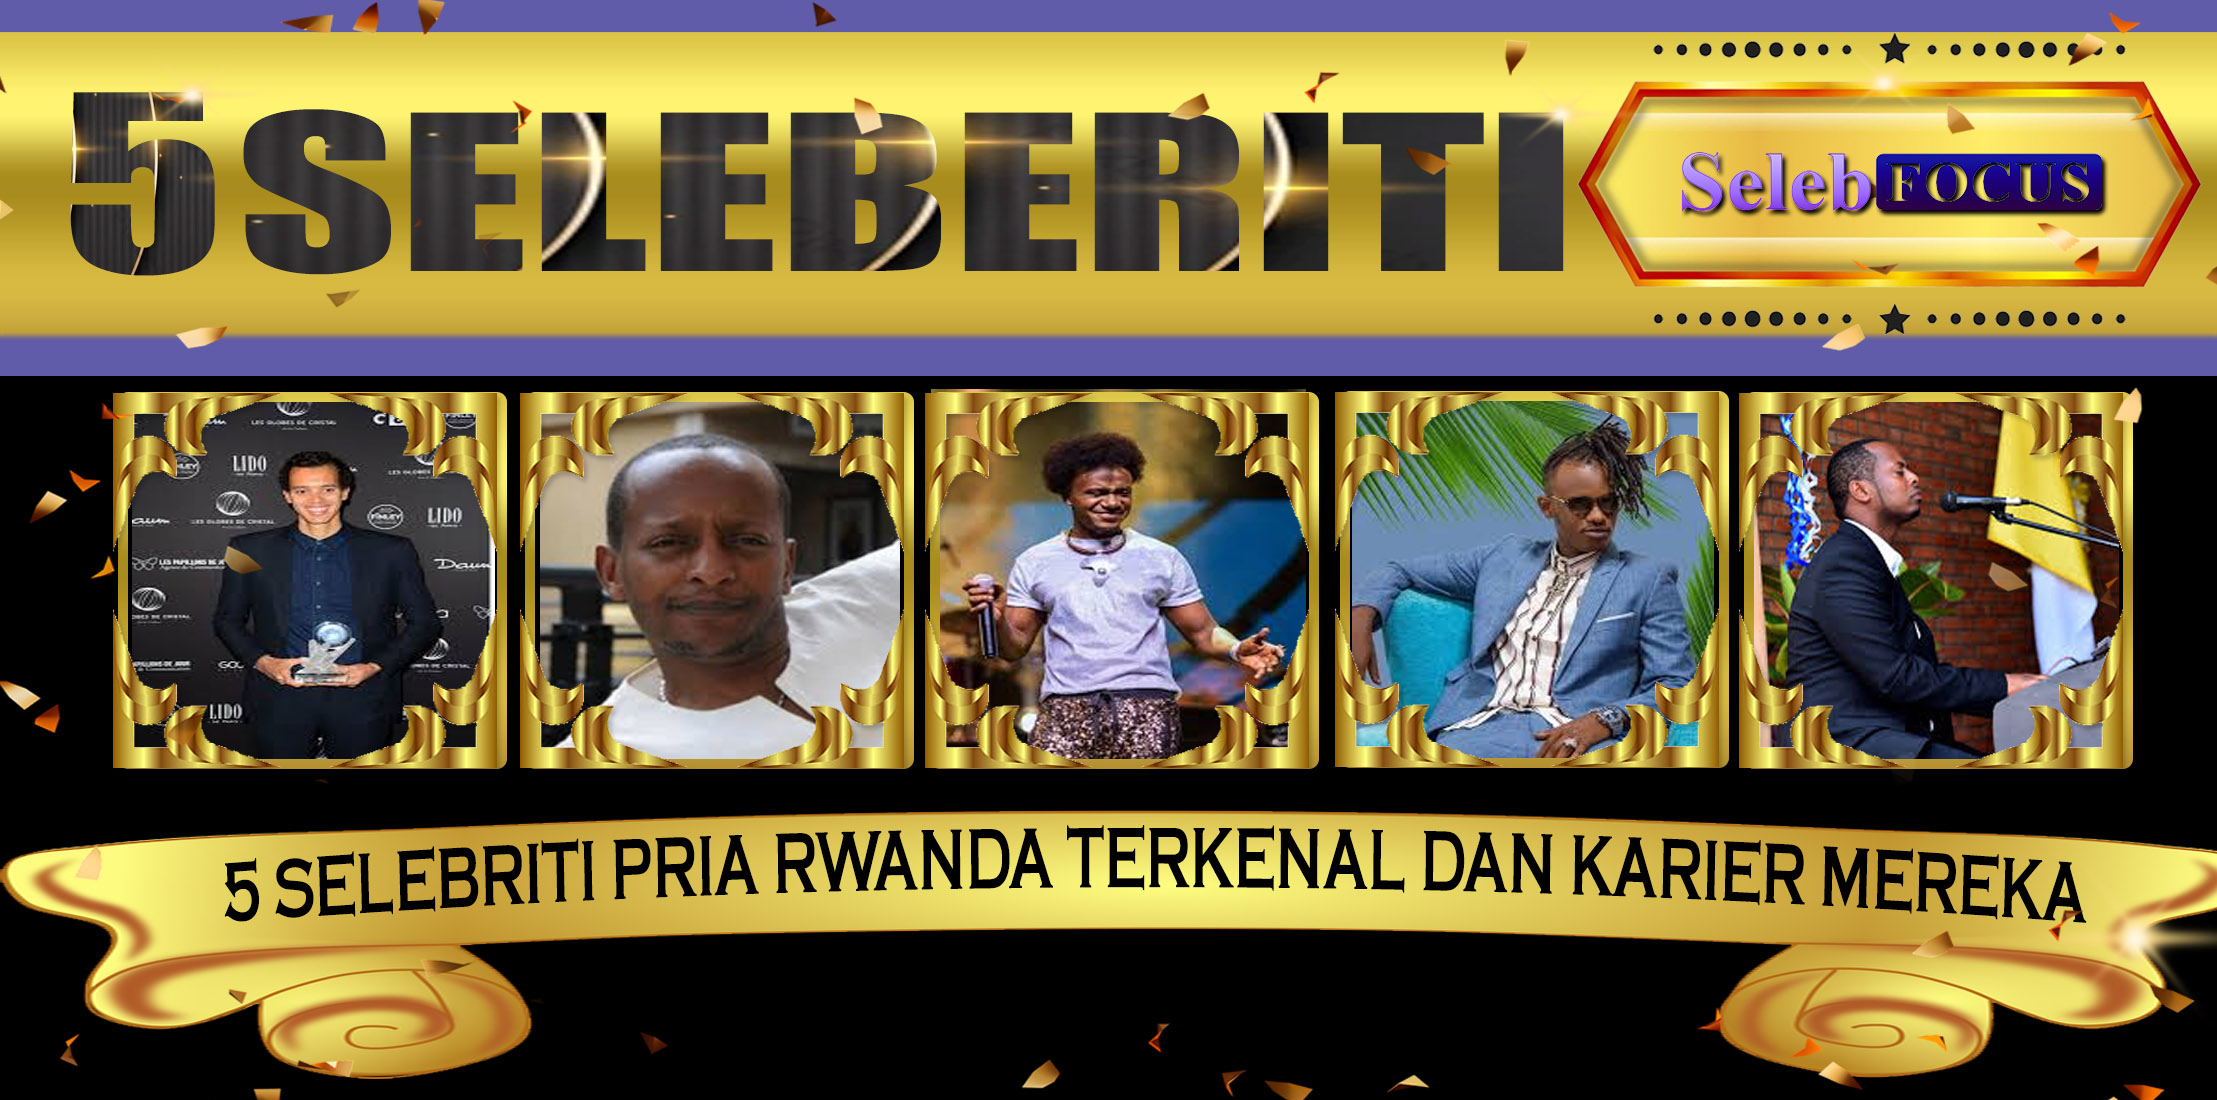 5 Selebriti Pria Rwanda Terkenal dan Karier Mereka